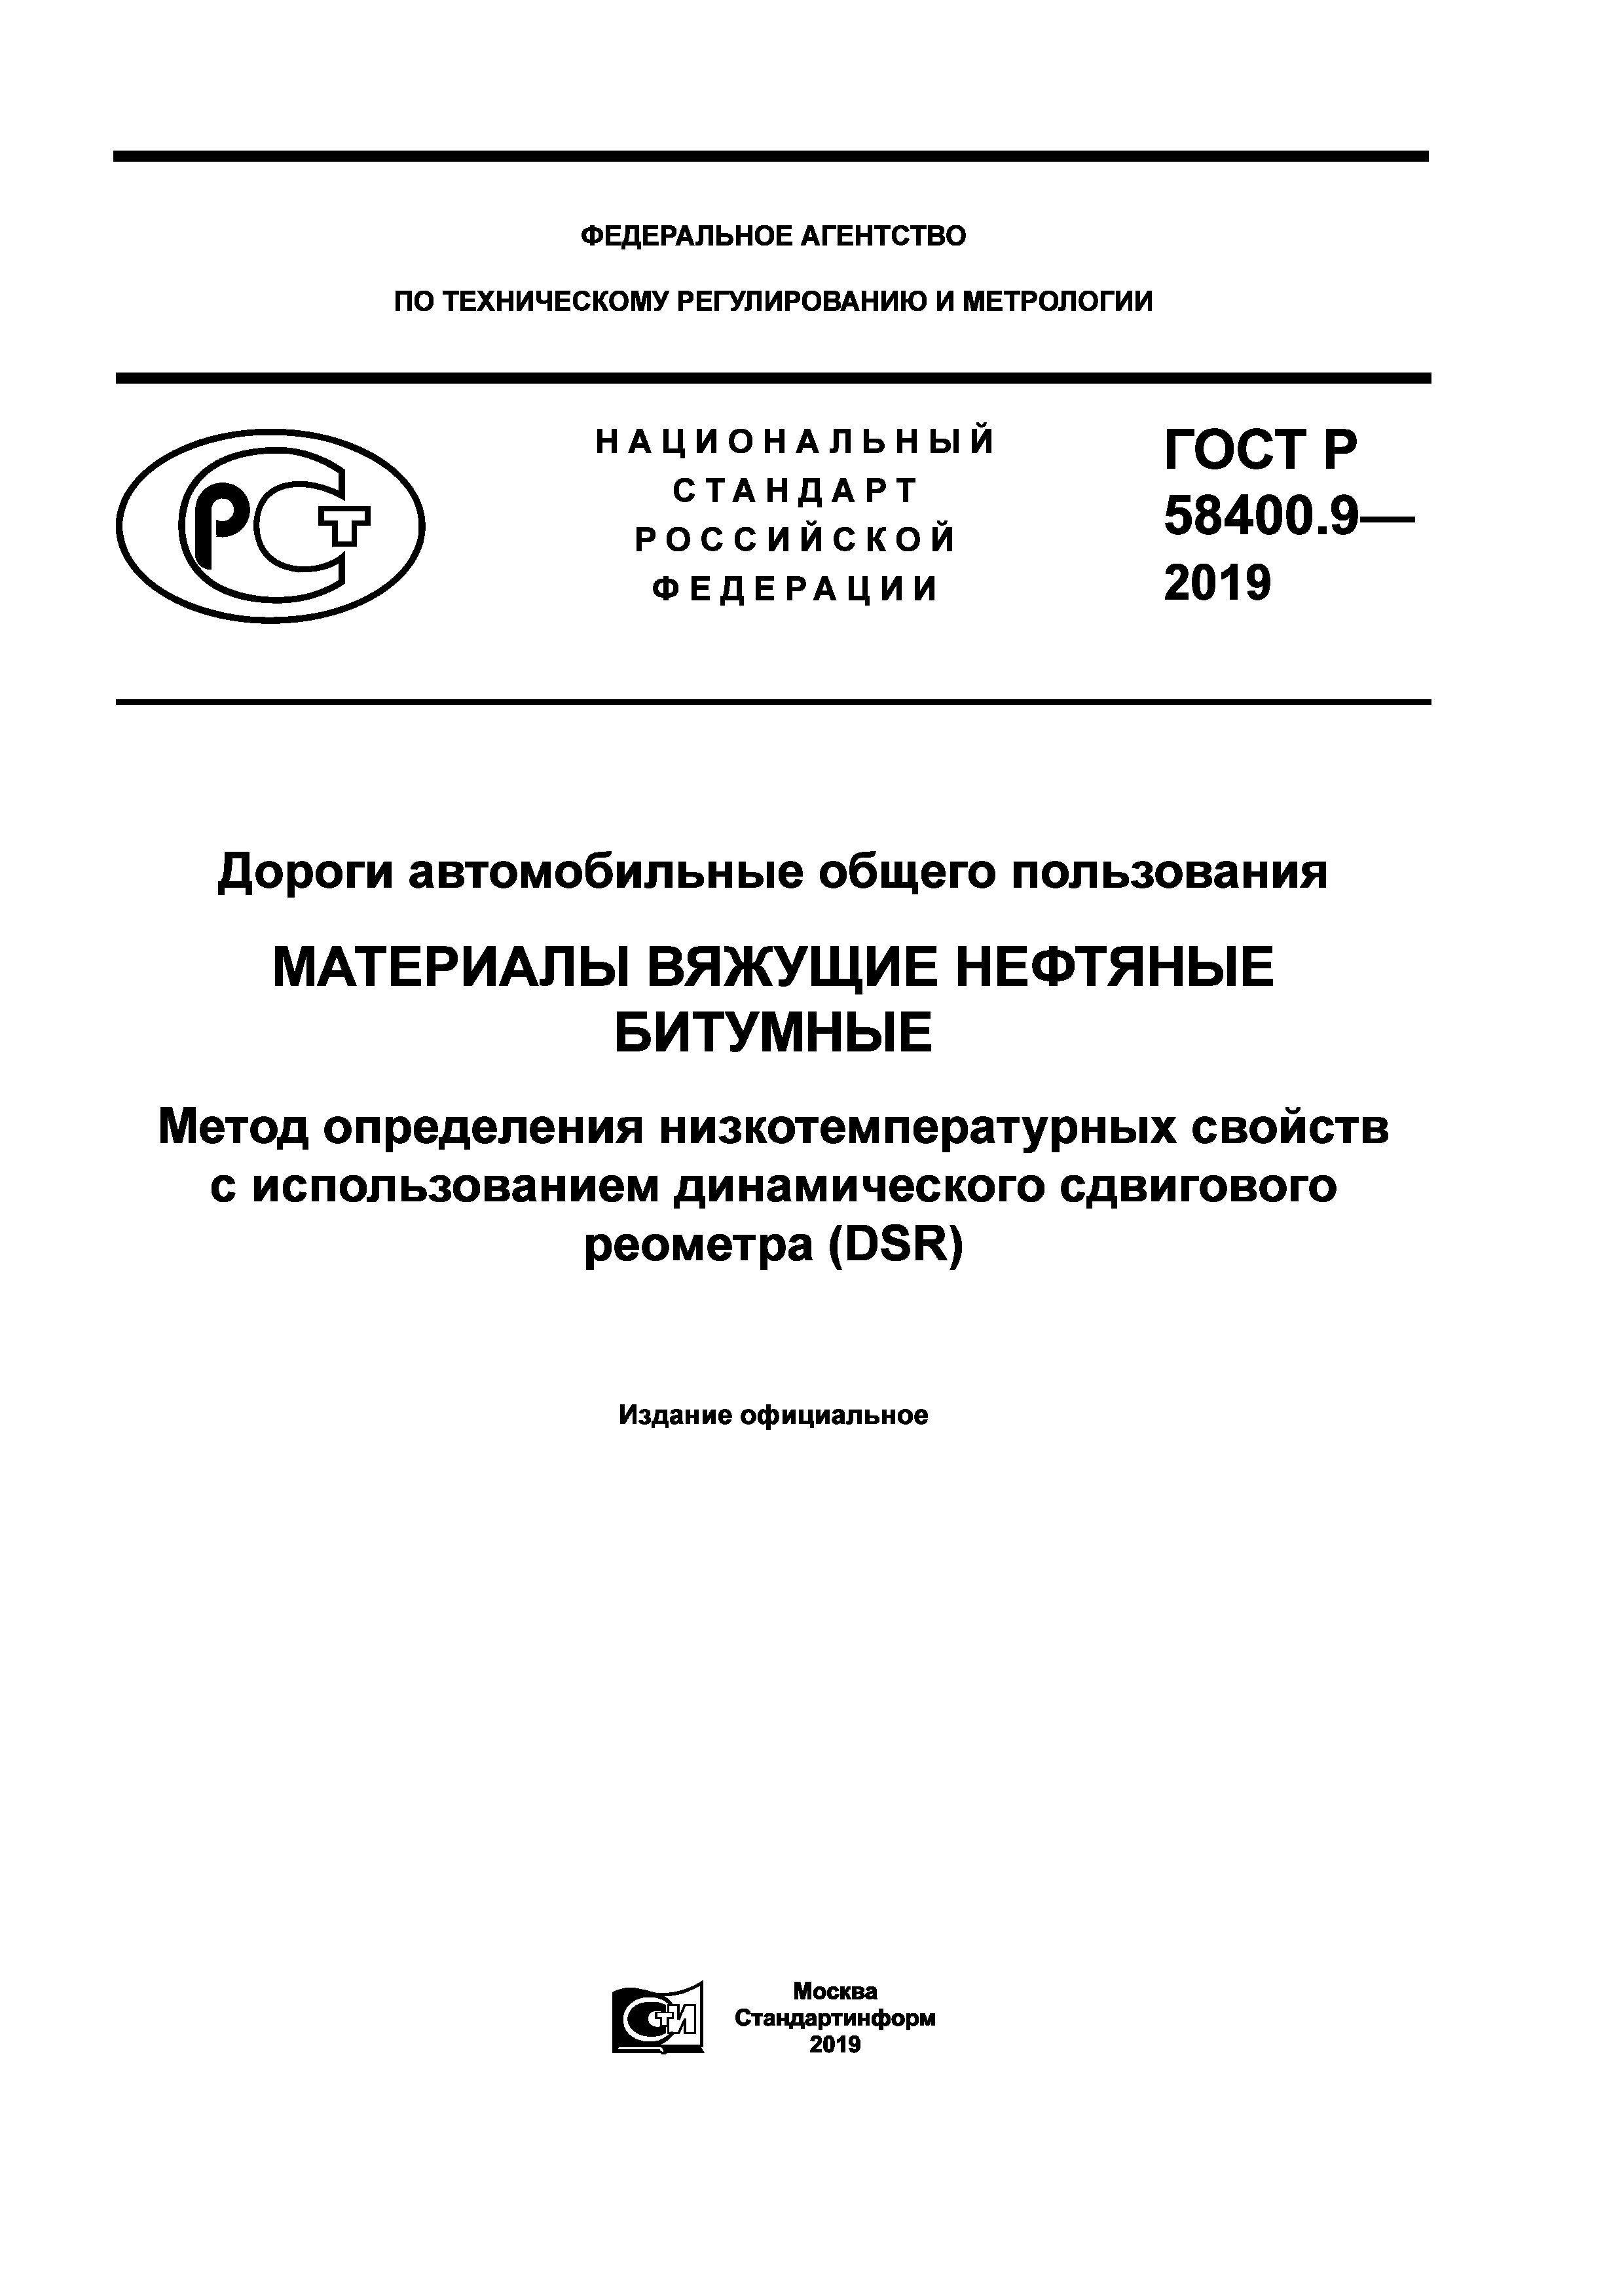 ГОСТ Р 58400.9-2019